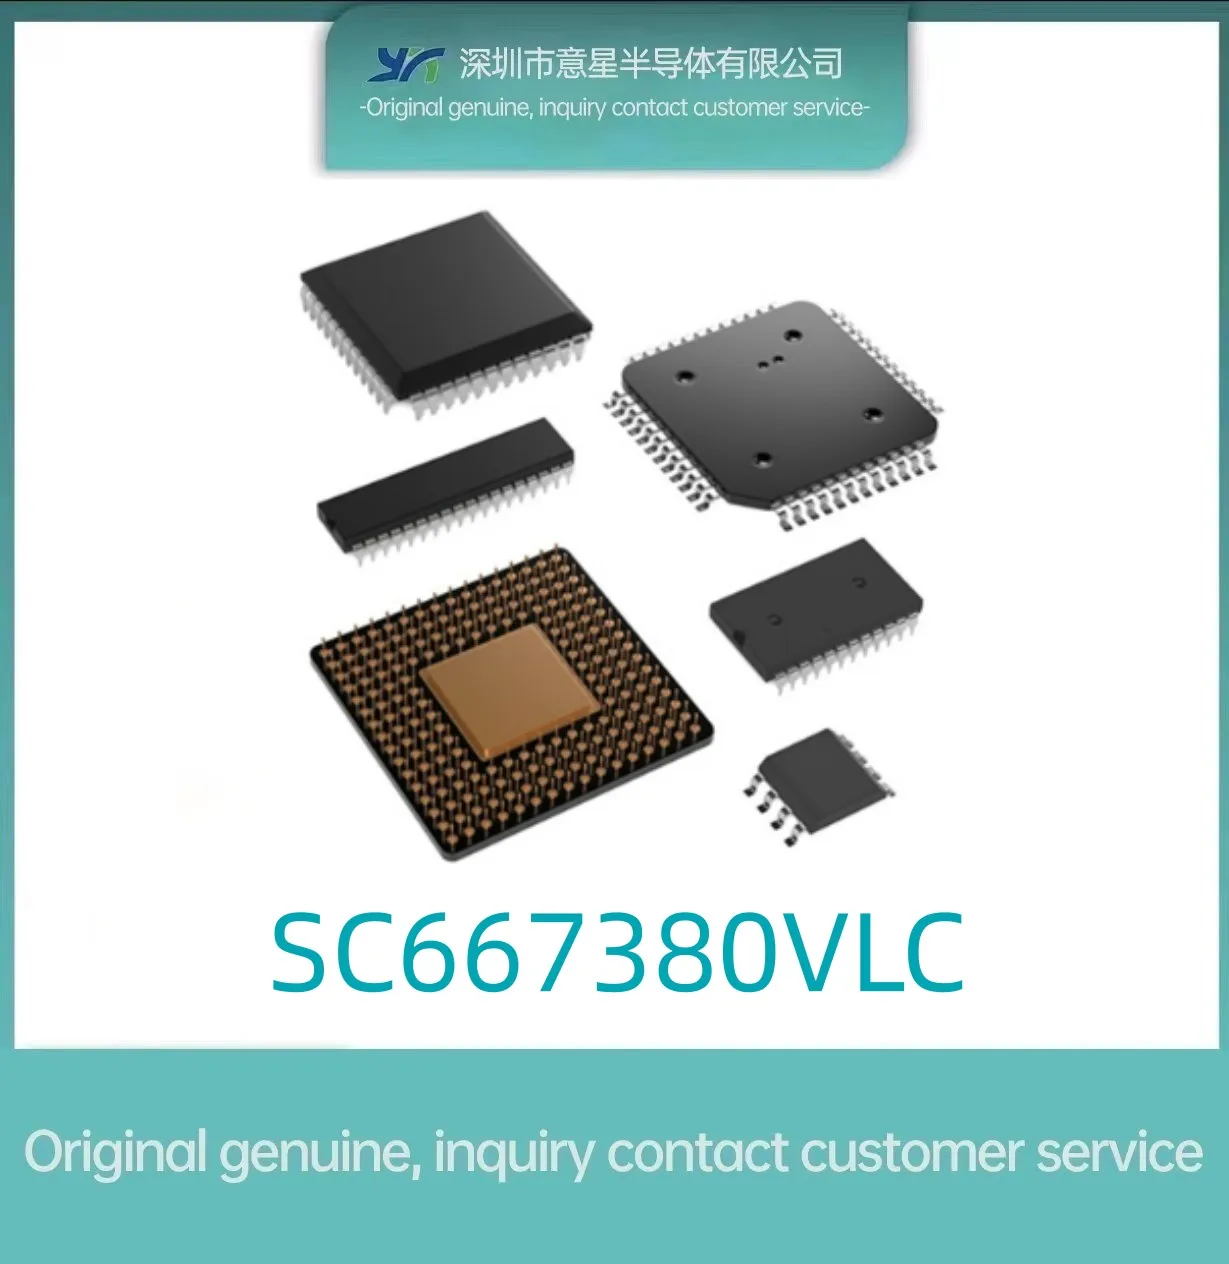 

SC667380VLC package QFP32 microcontroller new original stock